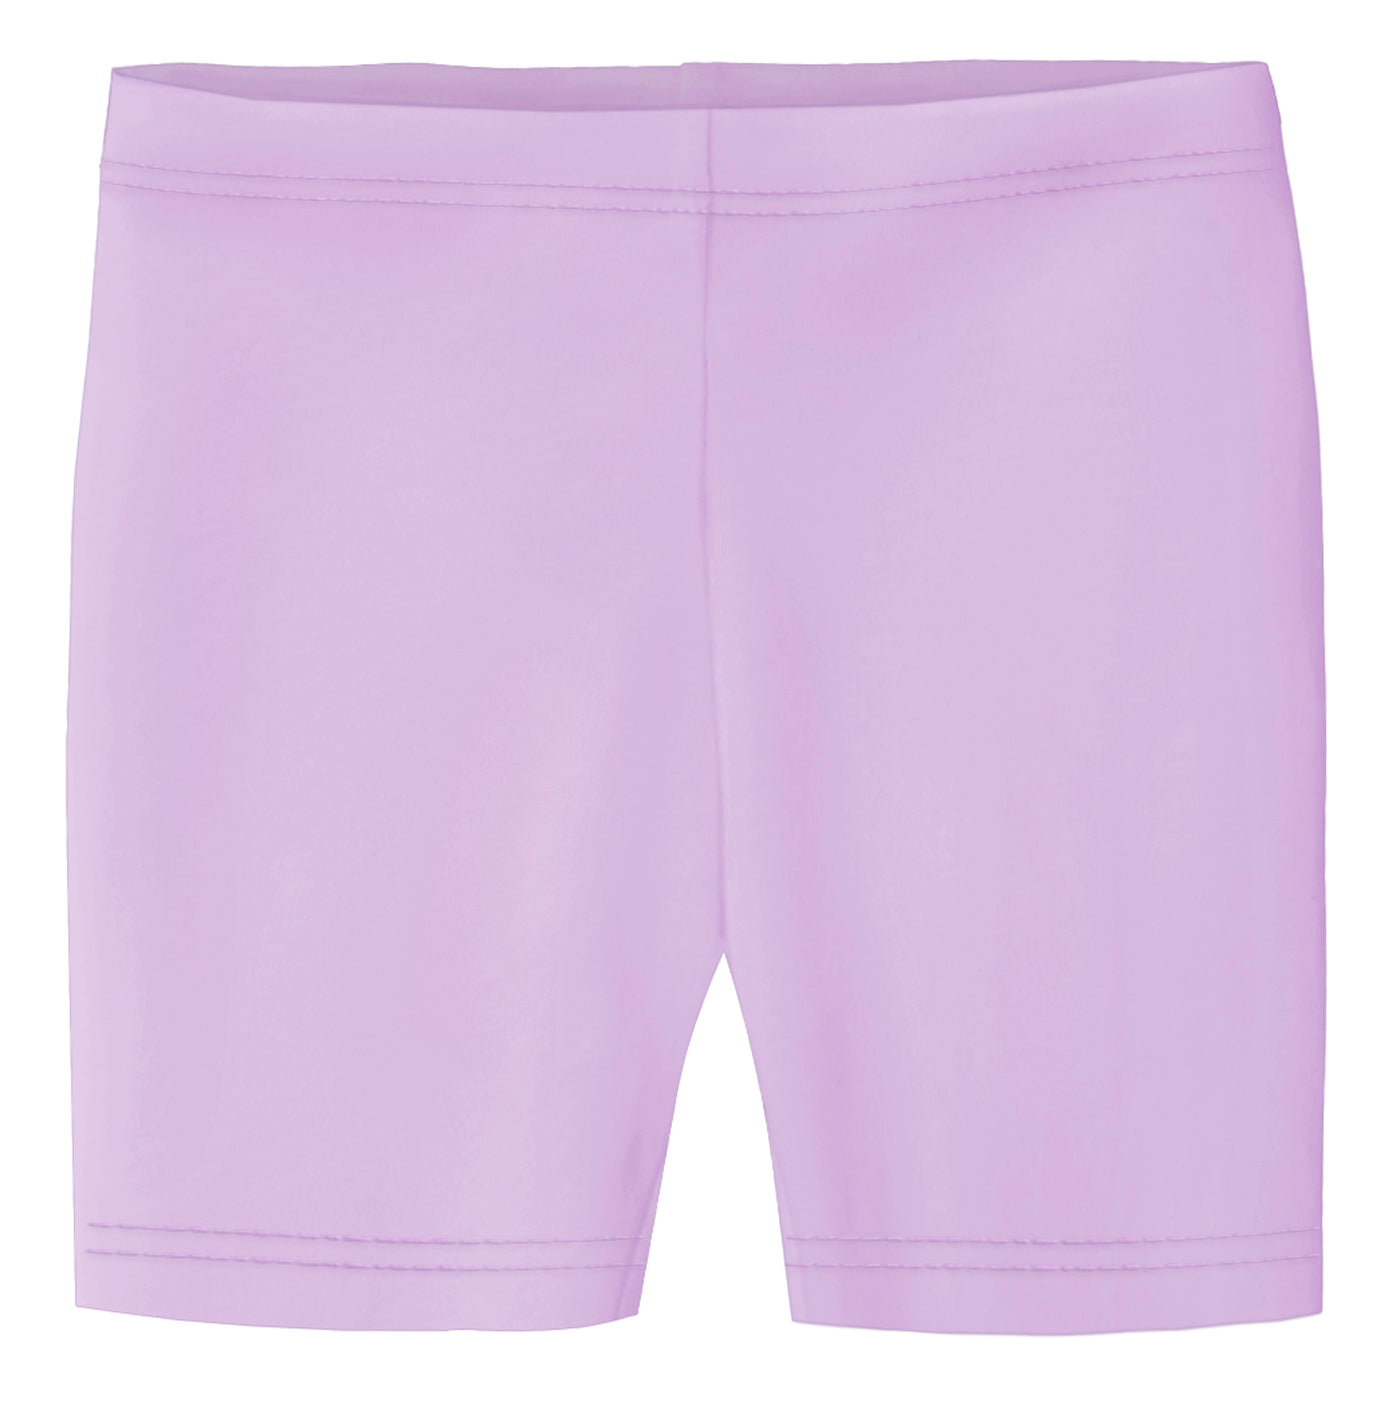 Womens Pink Cotton Cycling Shorts